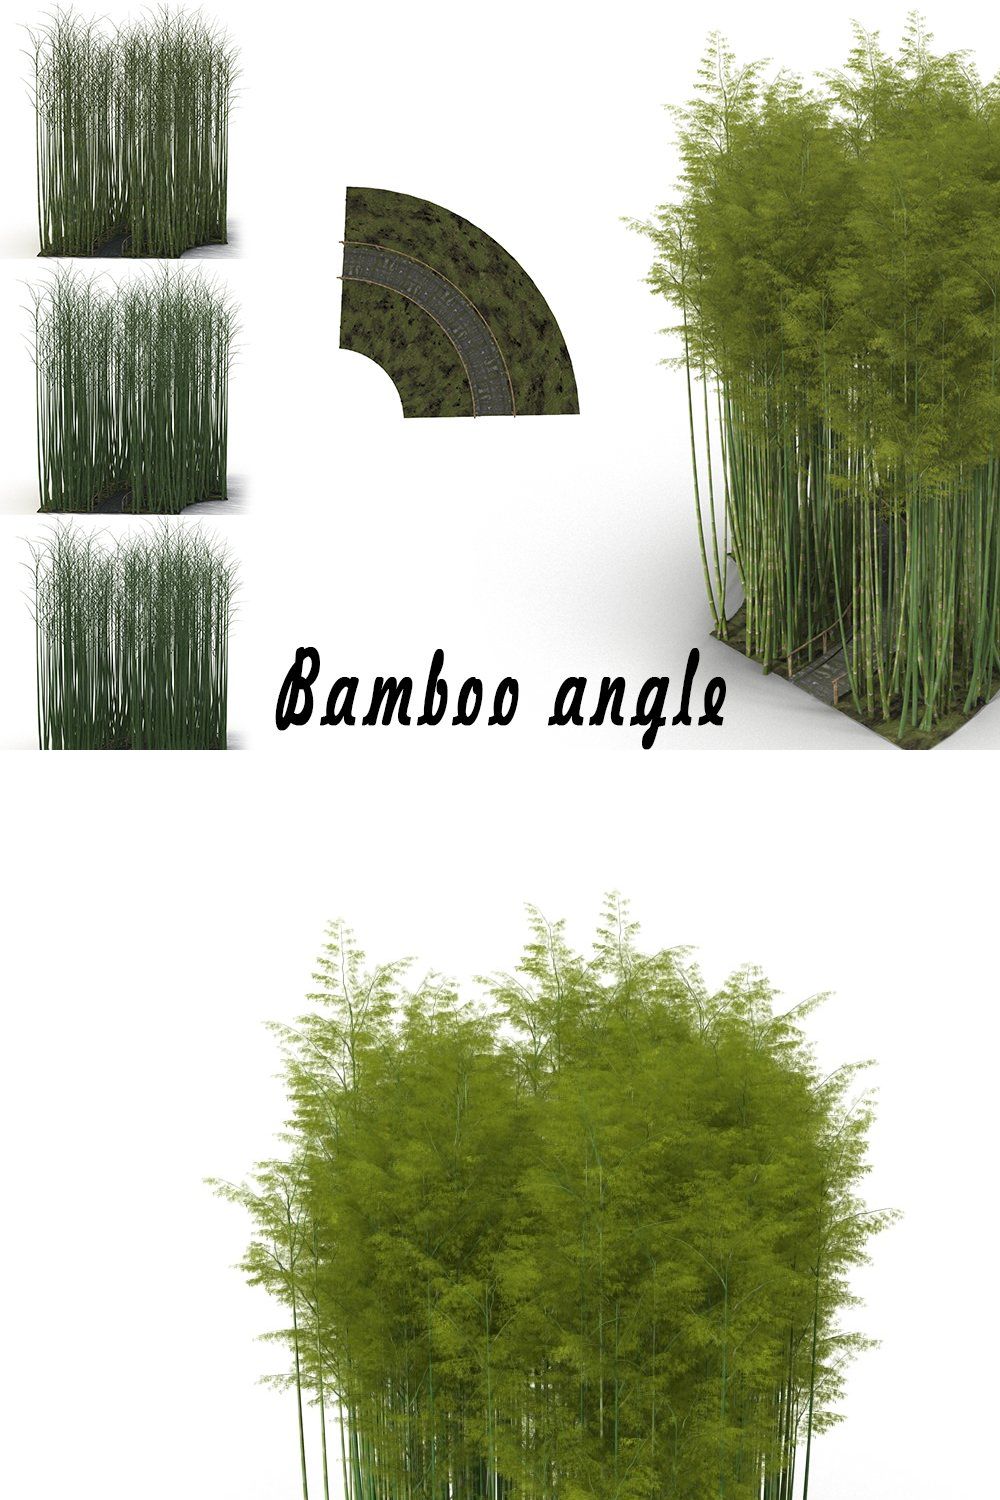 Bamboo corridor # 1 pinterest preview image.